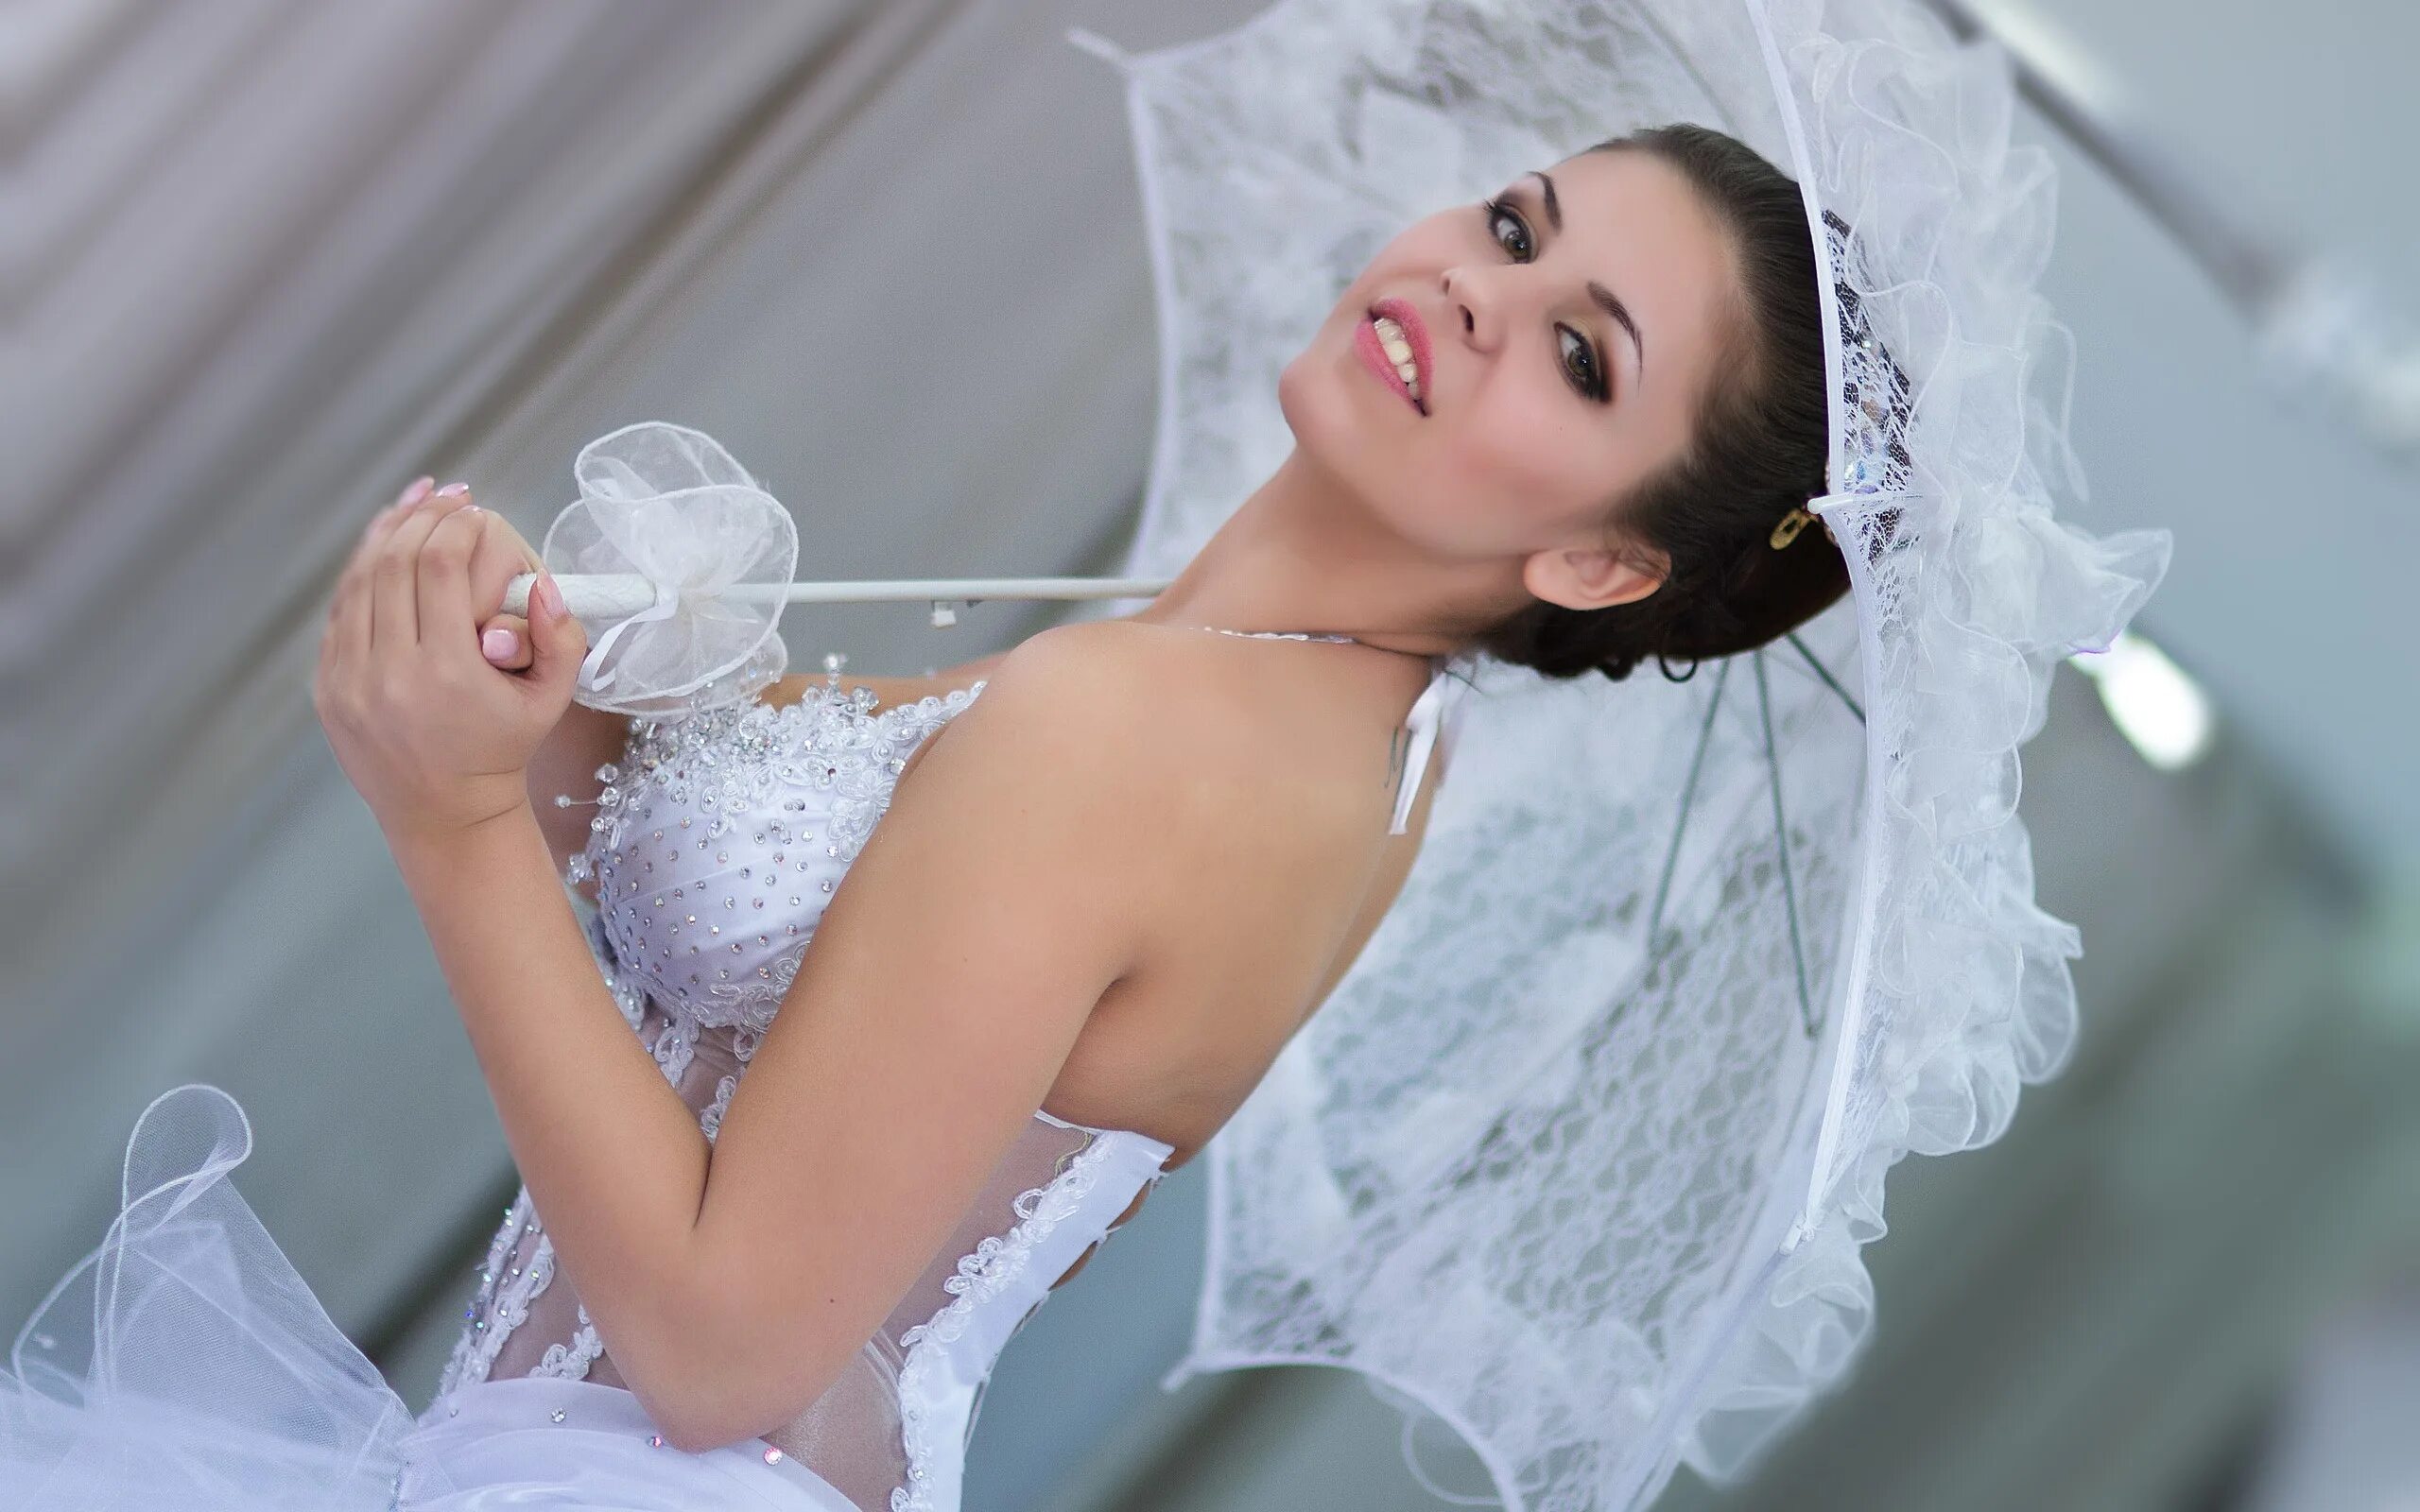 Литтл Каприс невеста. Фотосессия невесты. Невесты в свадебных платьях. Девушка невеста. Невеста 24 года